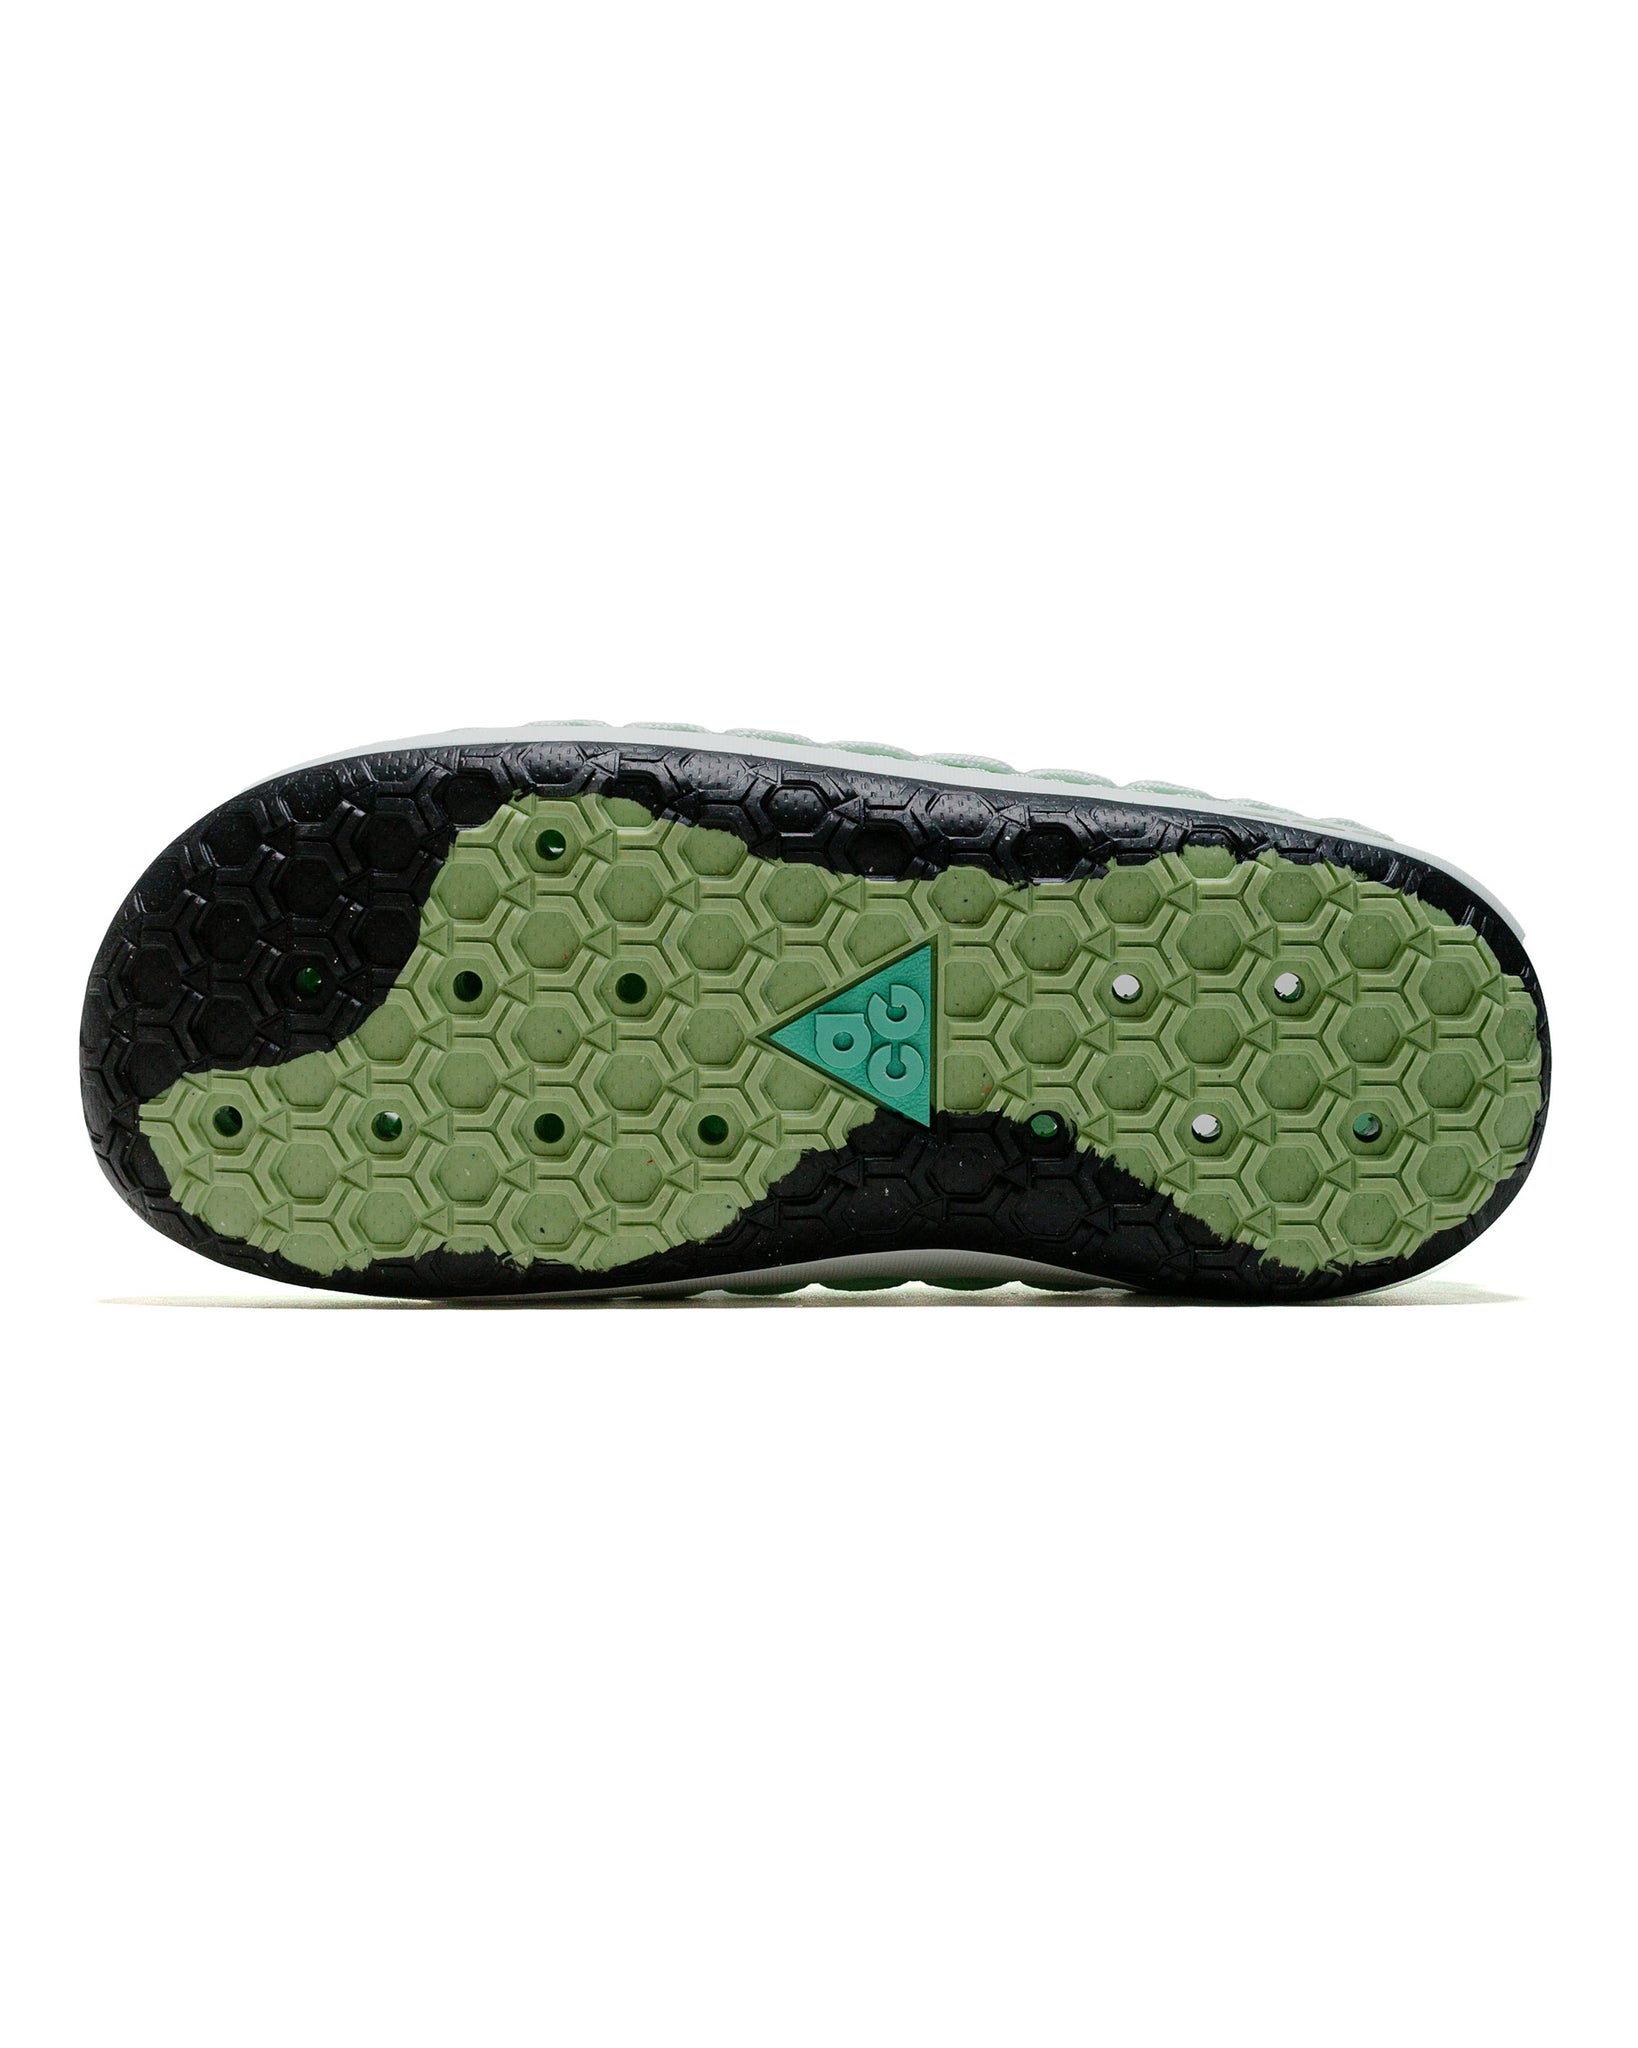 Nike ACG Watercat+ Vapour Green sole